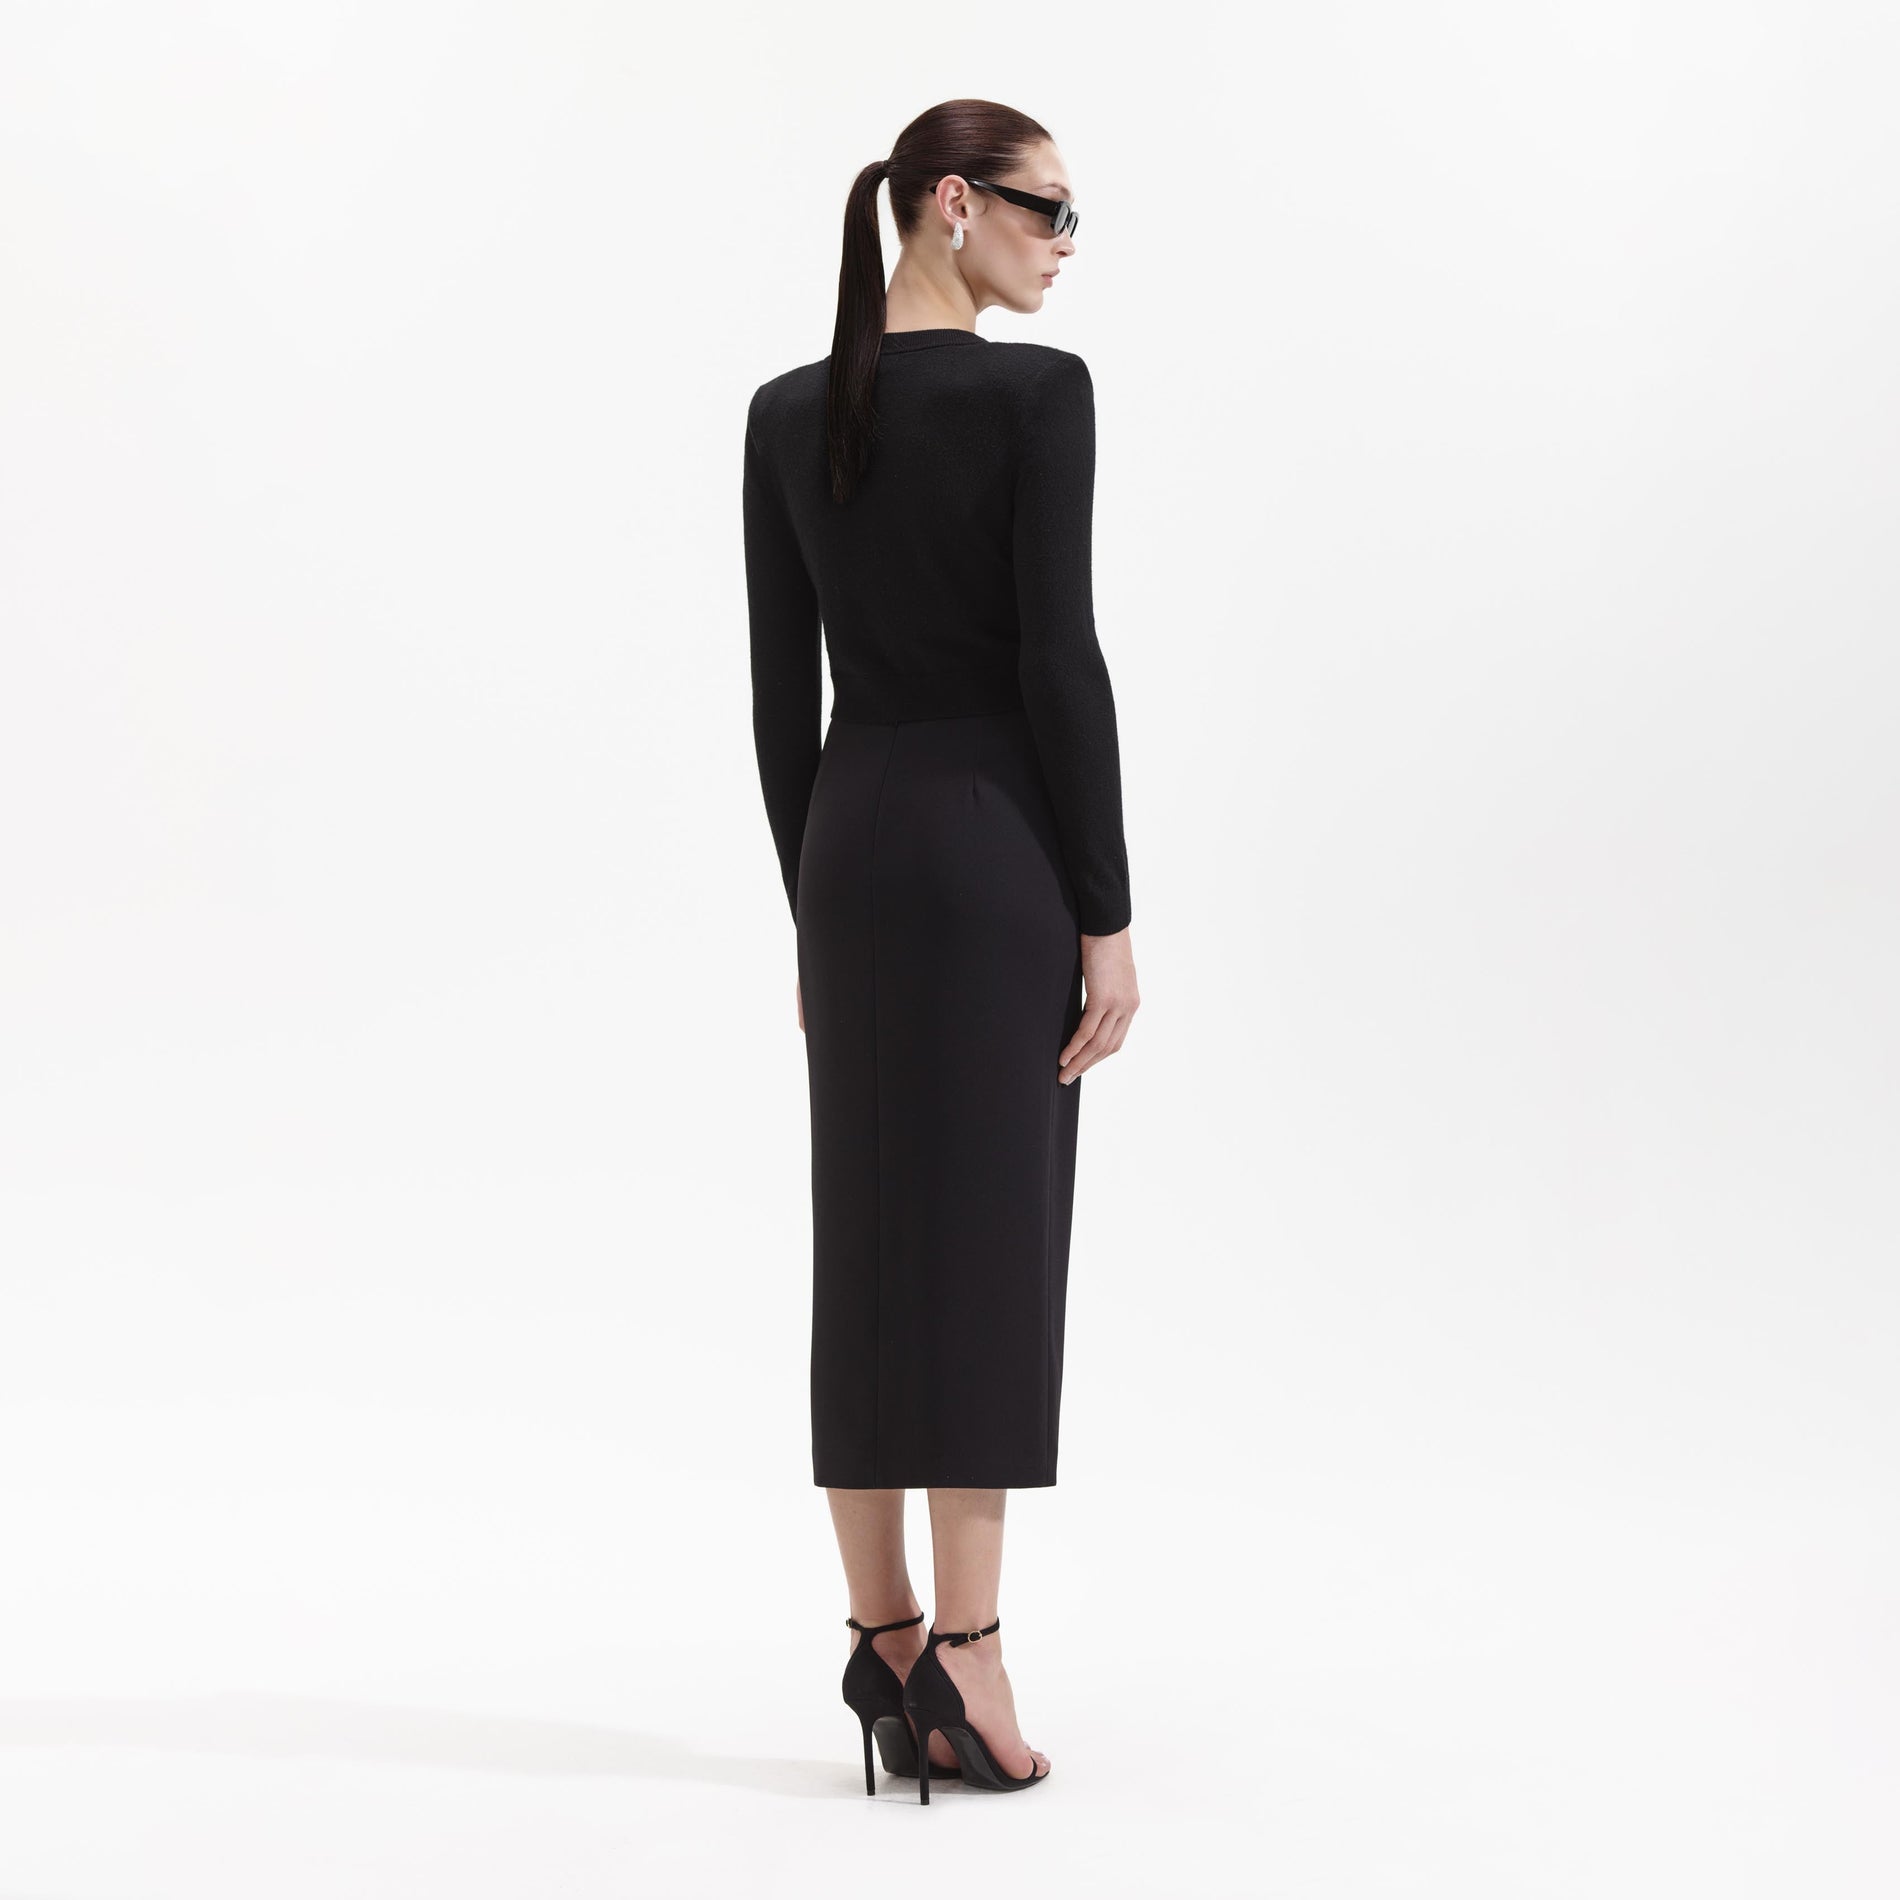 A Woman wearing the Black Crepe Midi Skirt